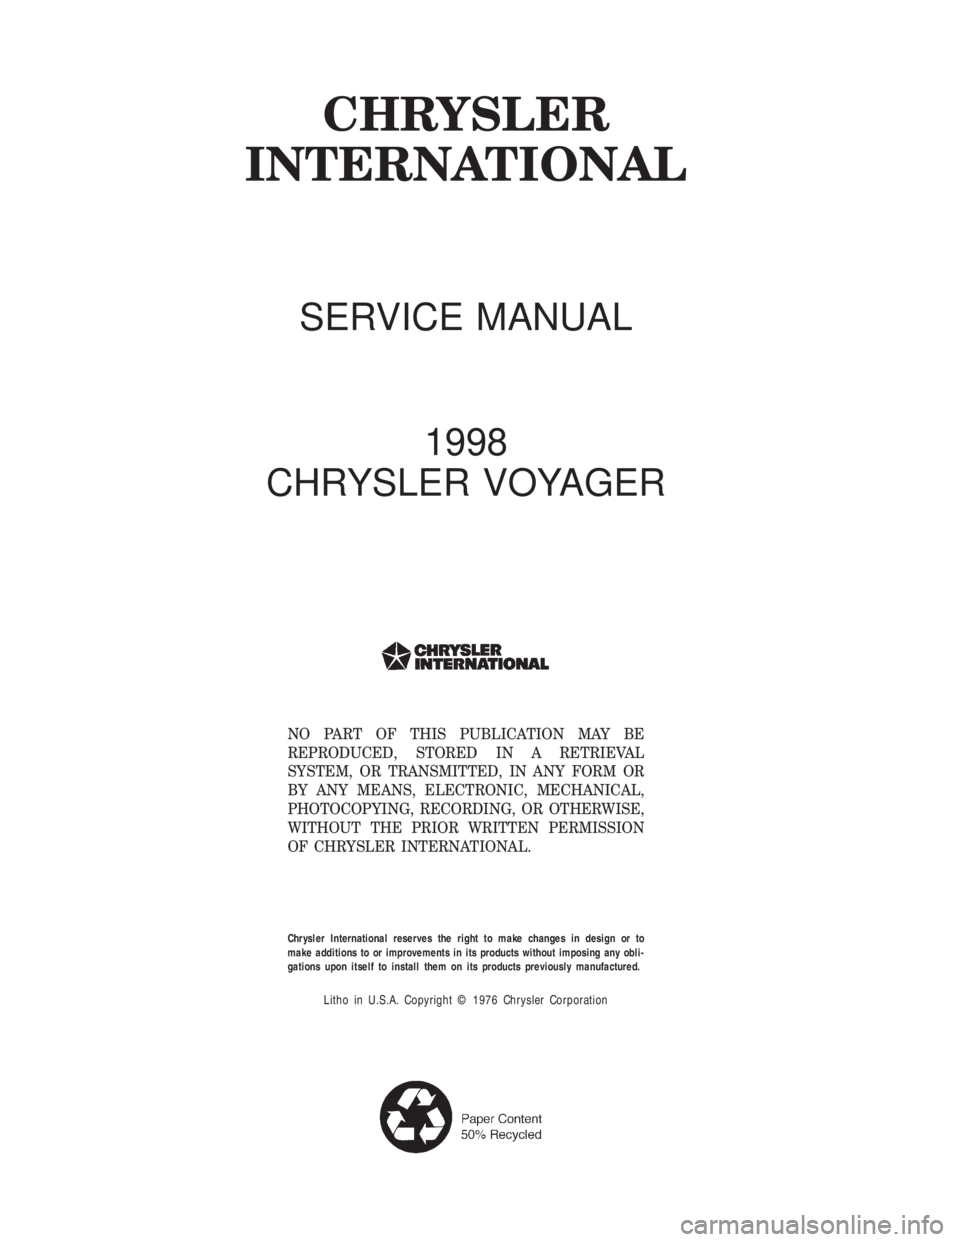 chrysler voyager 1996 service manual free download